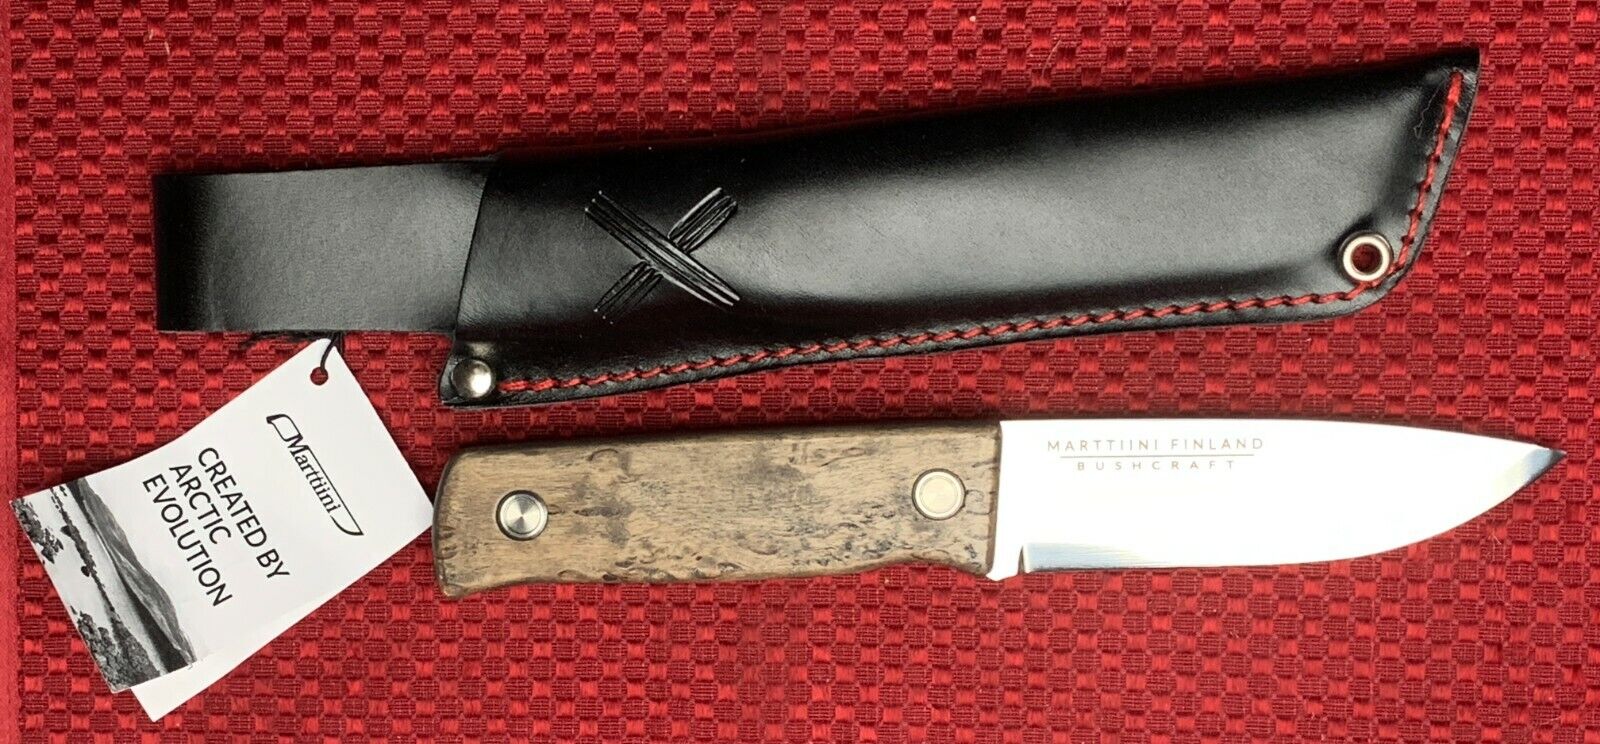 Marttiini Tundra Kelo full tang bushcraft knife 352015 GR Serious..from Finland 